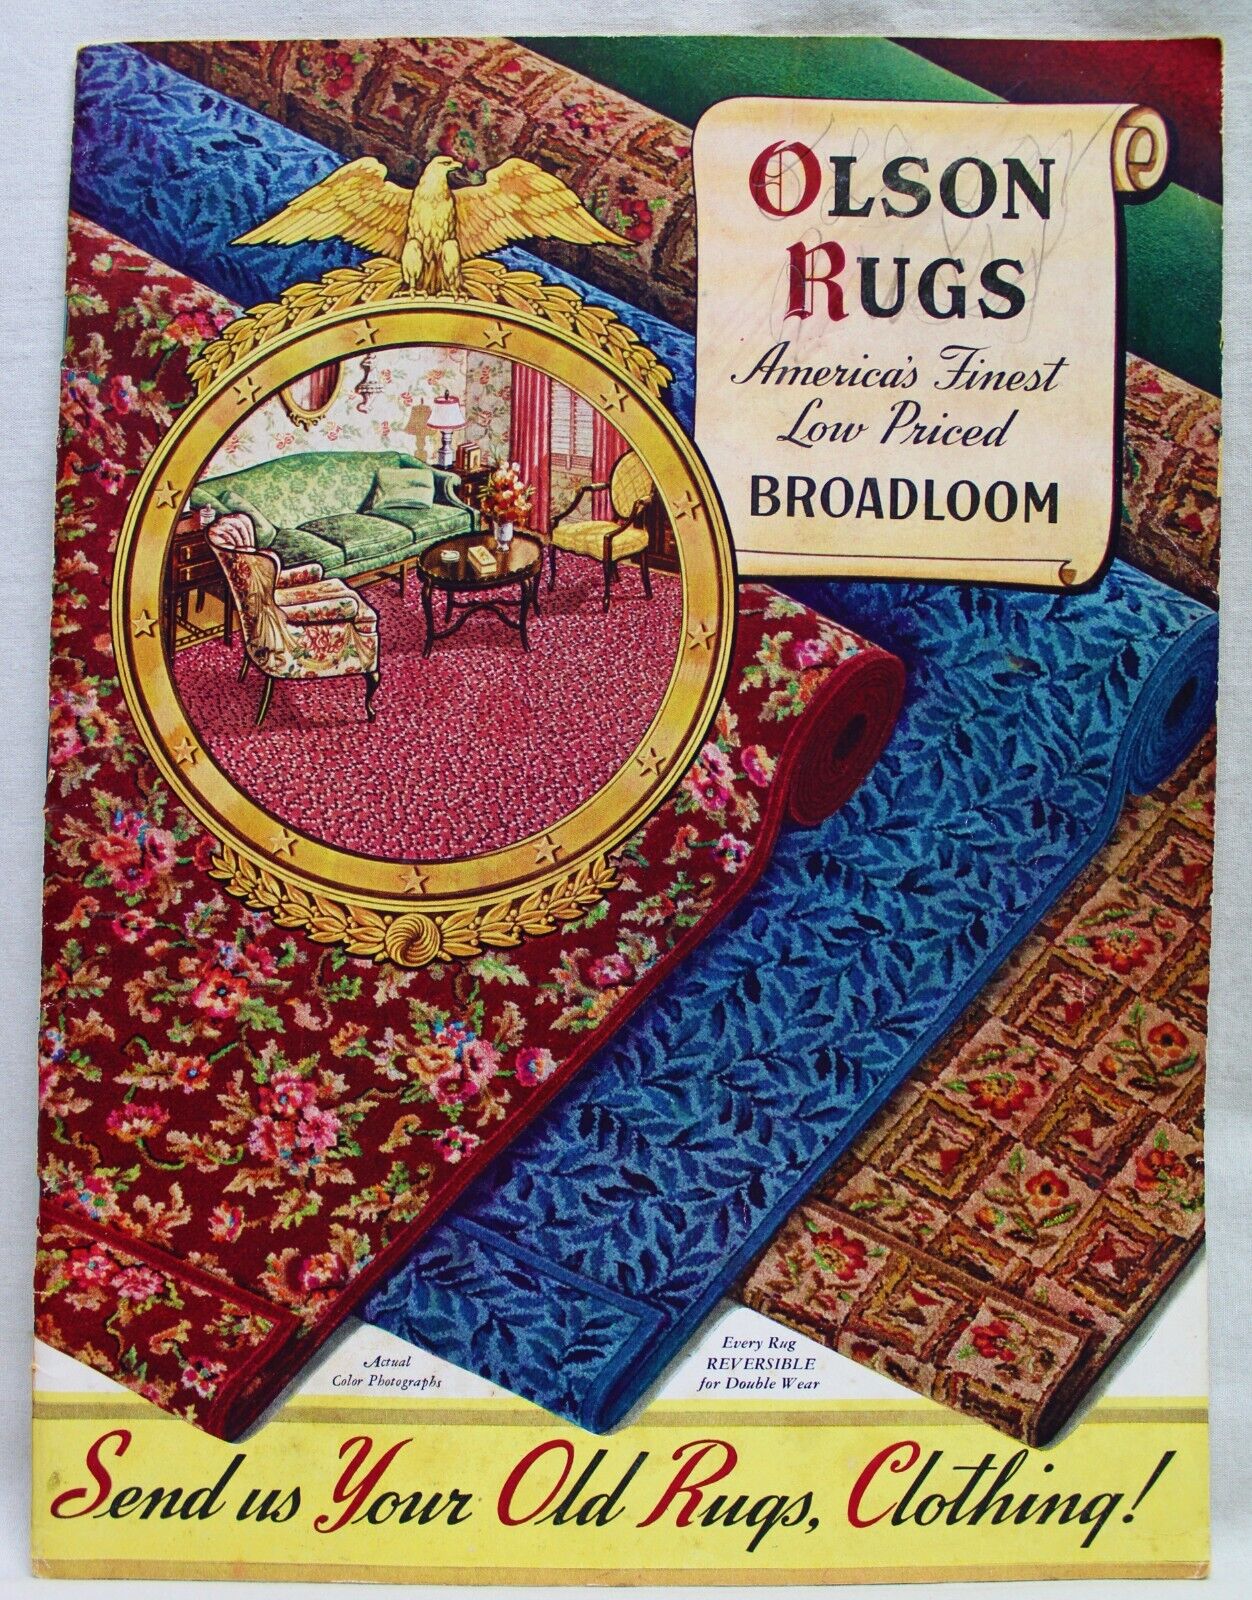 OLSON RUG COMPANY ADVERTISING SALES CATALOG OF BROADLOOM CARPETS 1935 VINTAGE